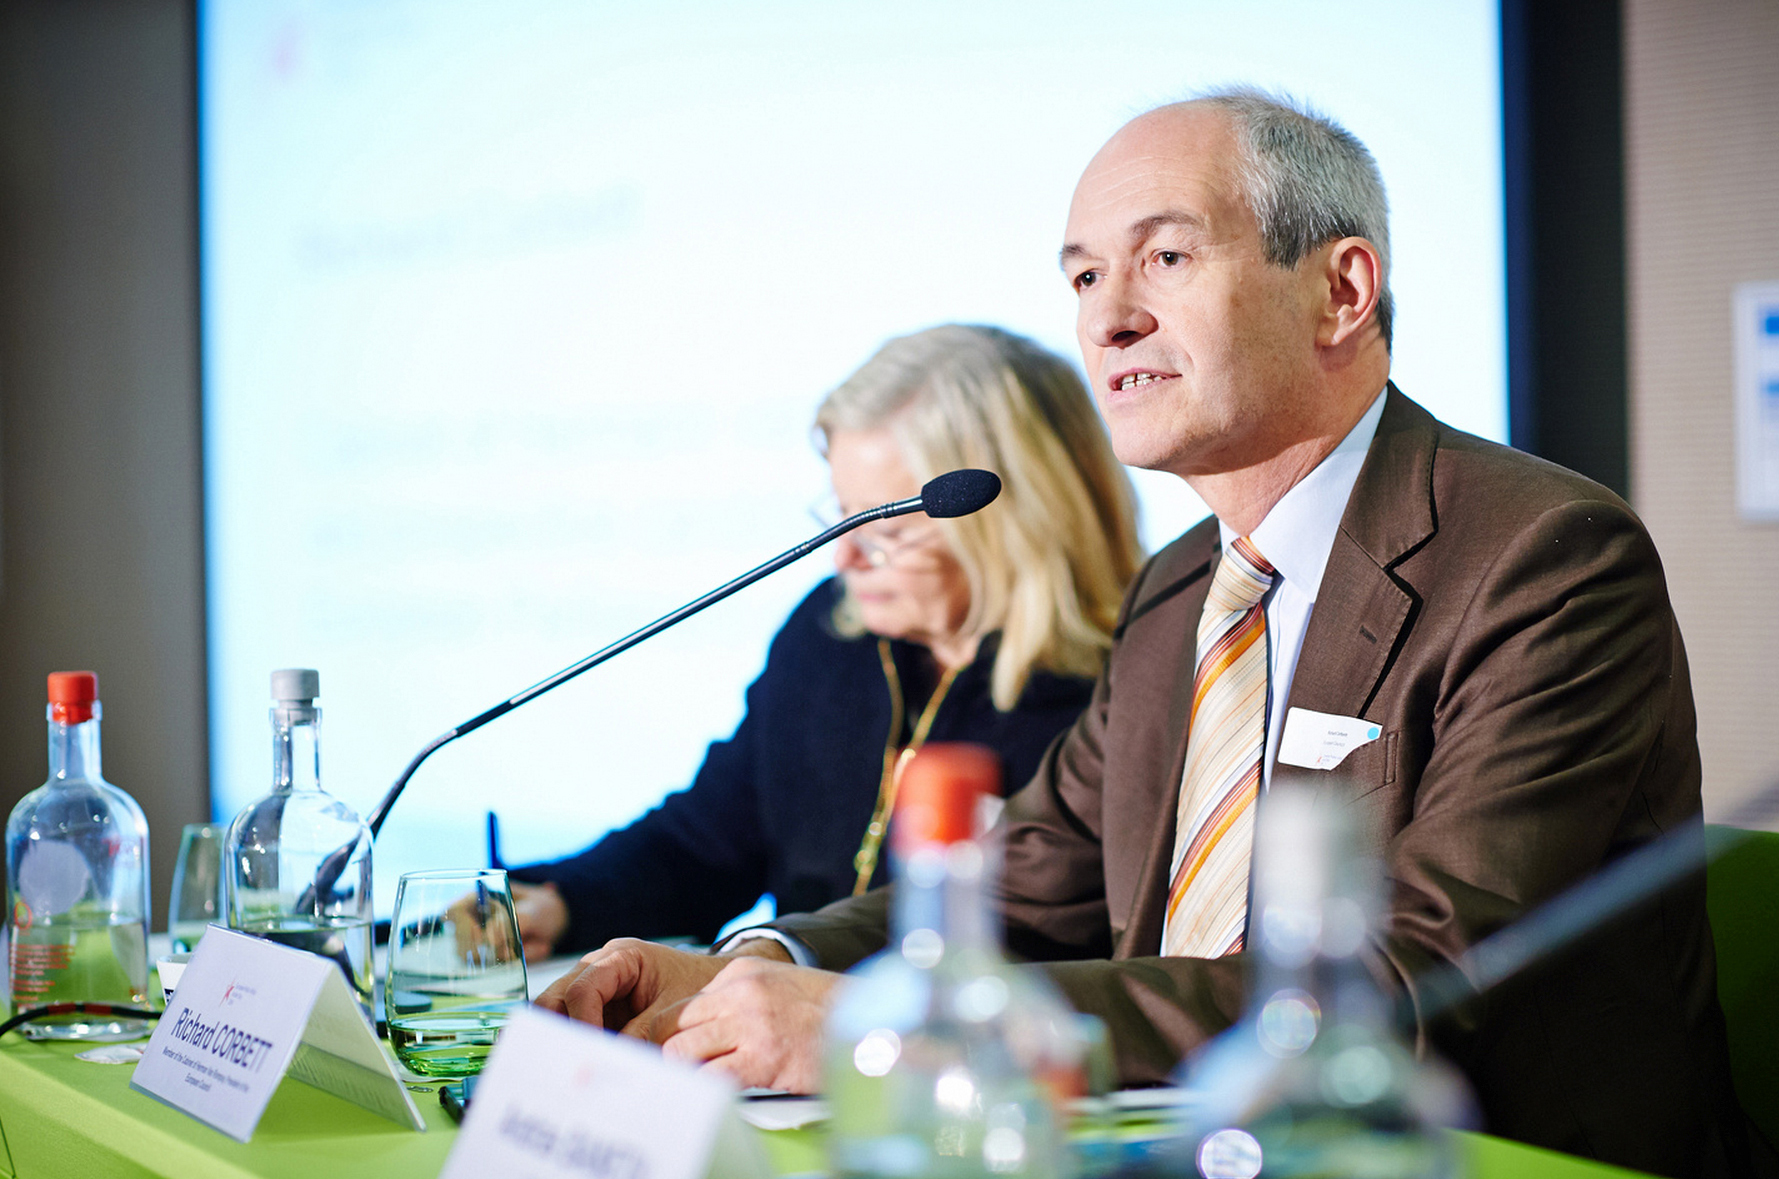 Richard speaking at European Public Affairs Action Day 2014